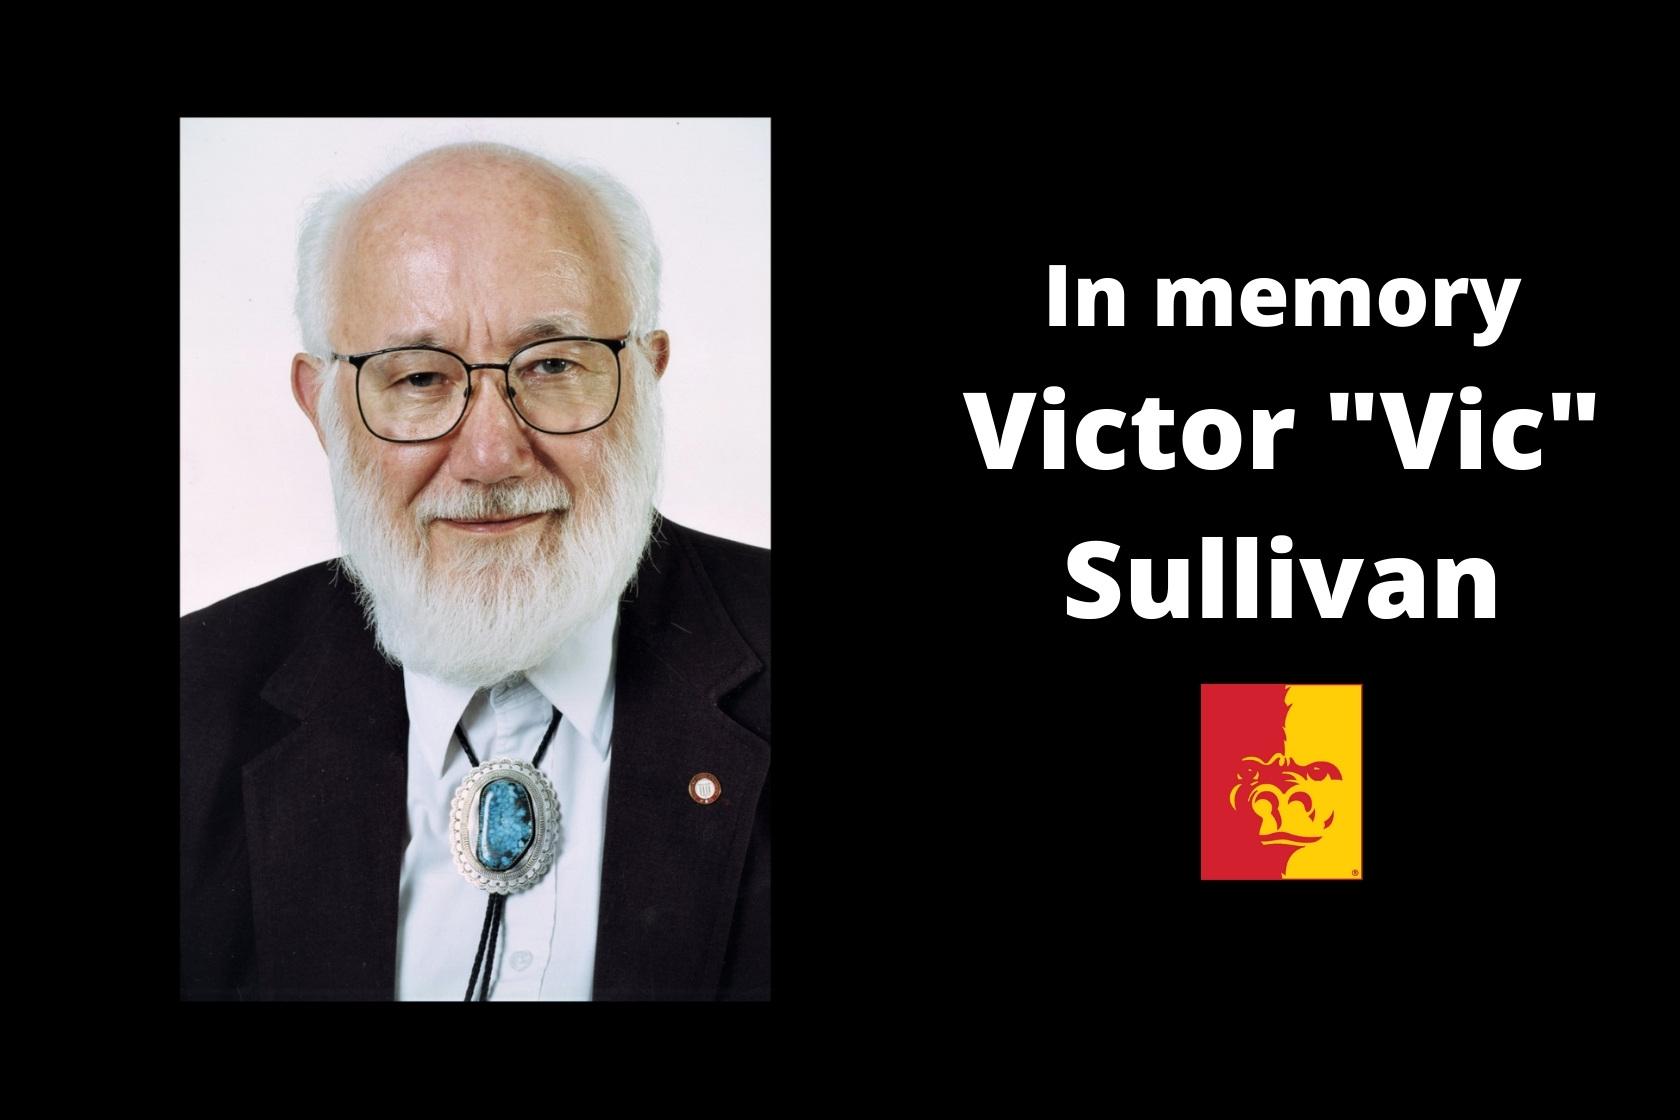 Vic Sullivan